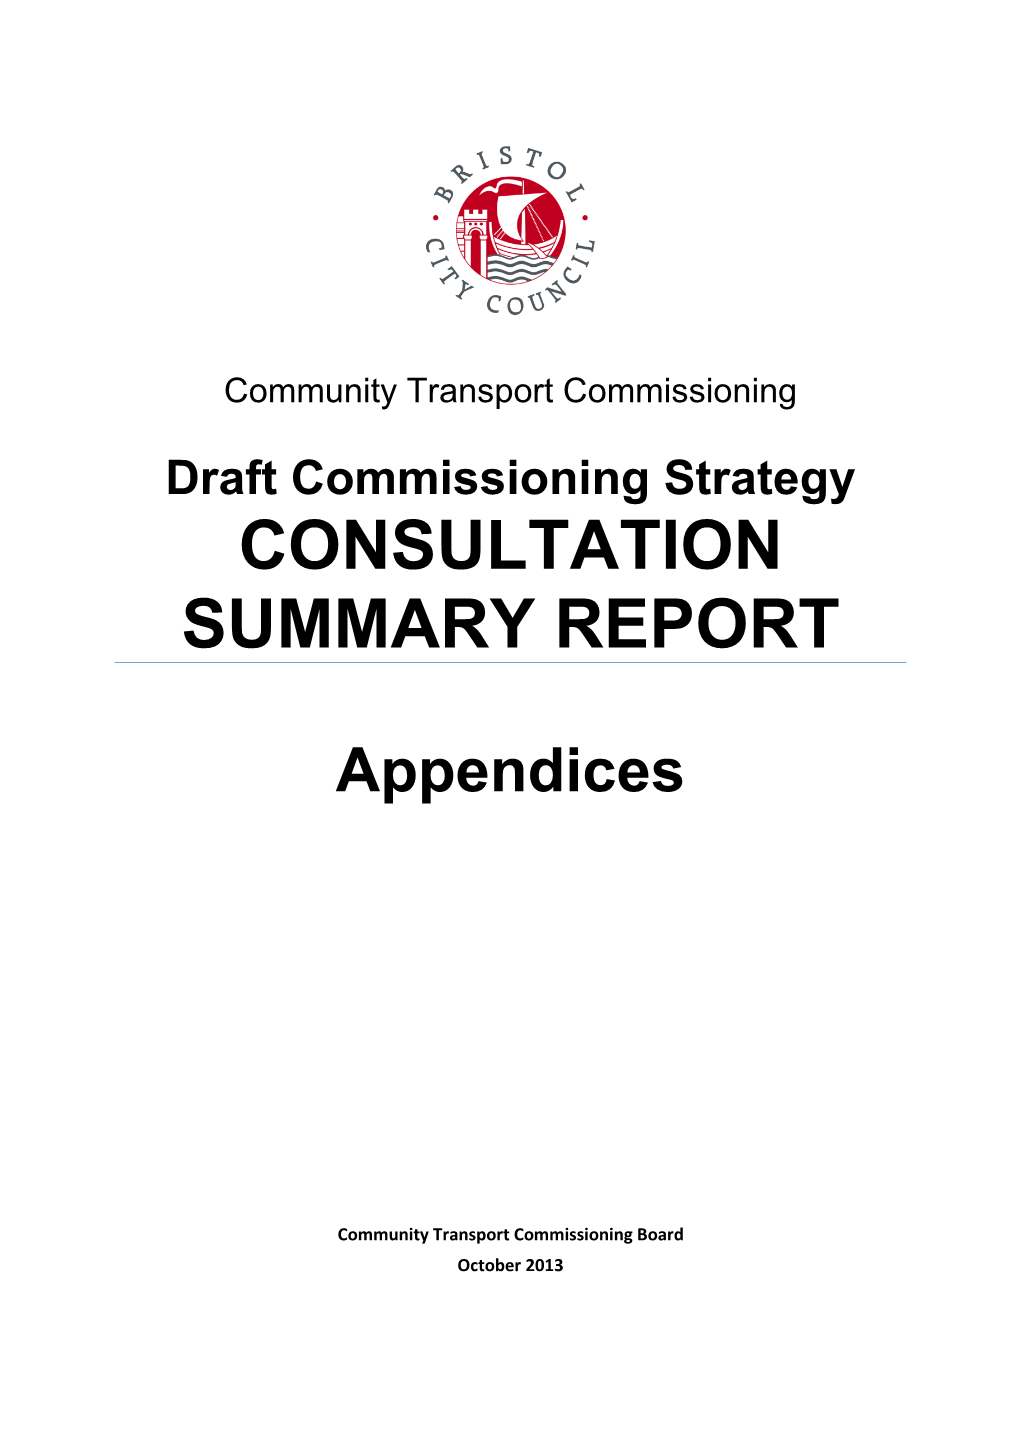 Consultation Summary Report